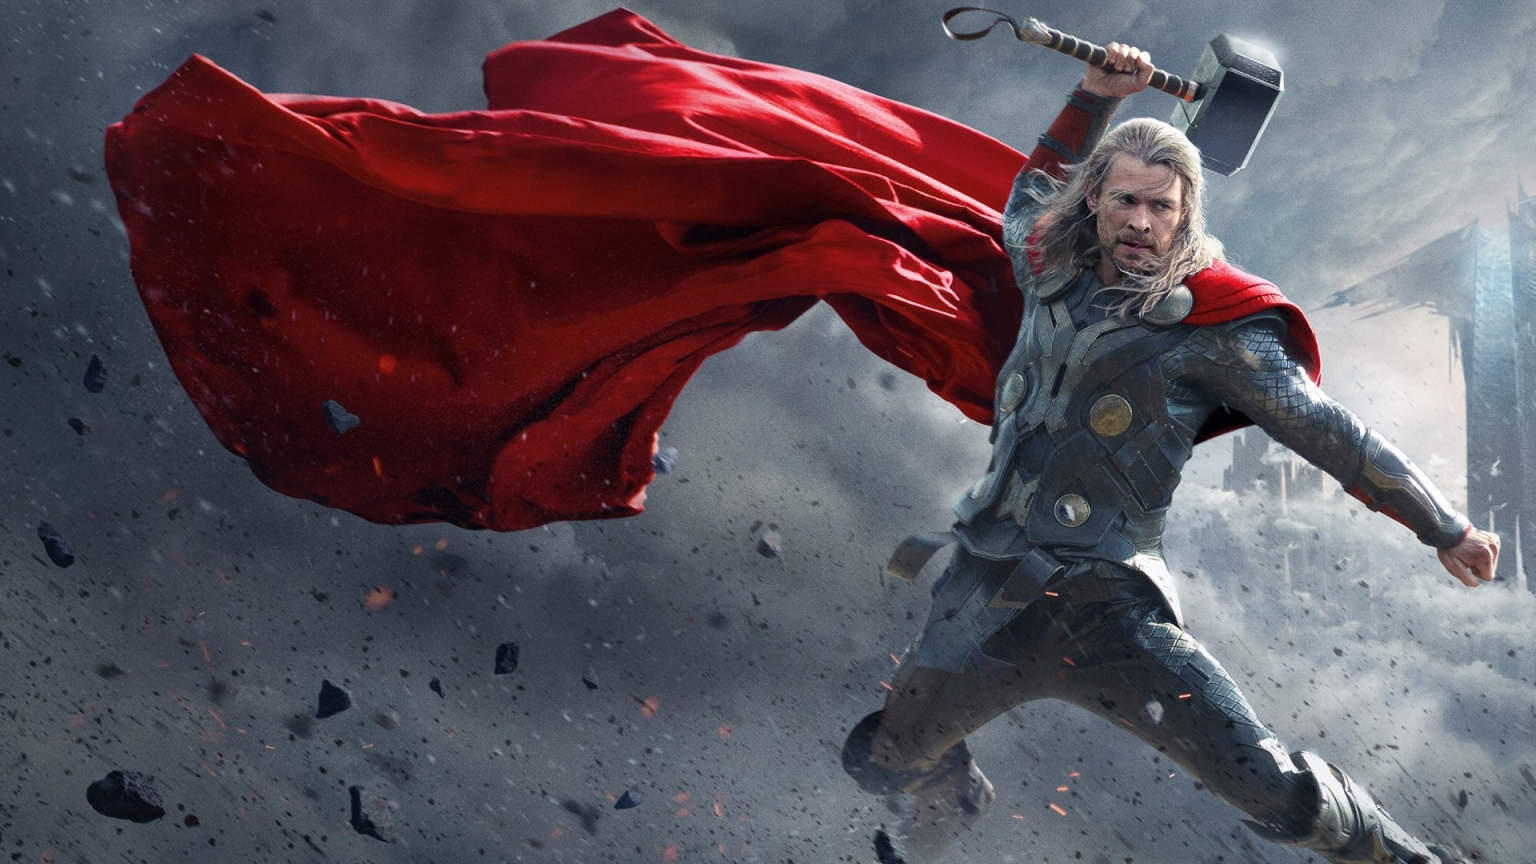 2013 Thor The Dark World Poster for 1536 x 864 HDTV resolution